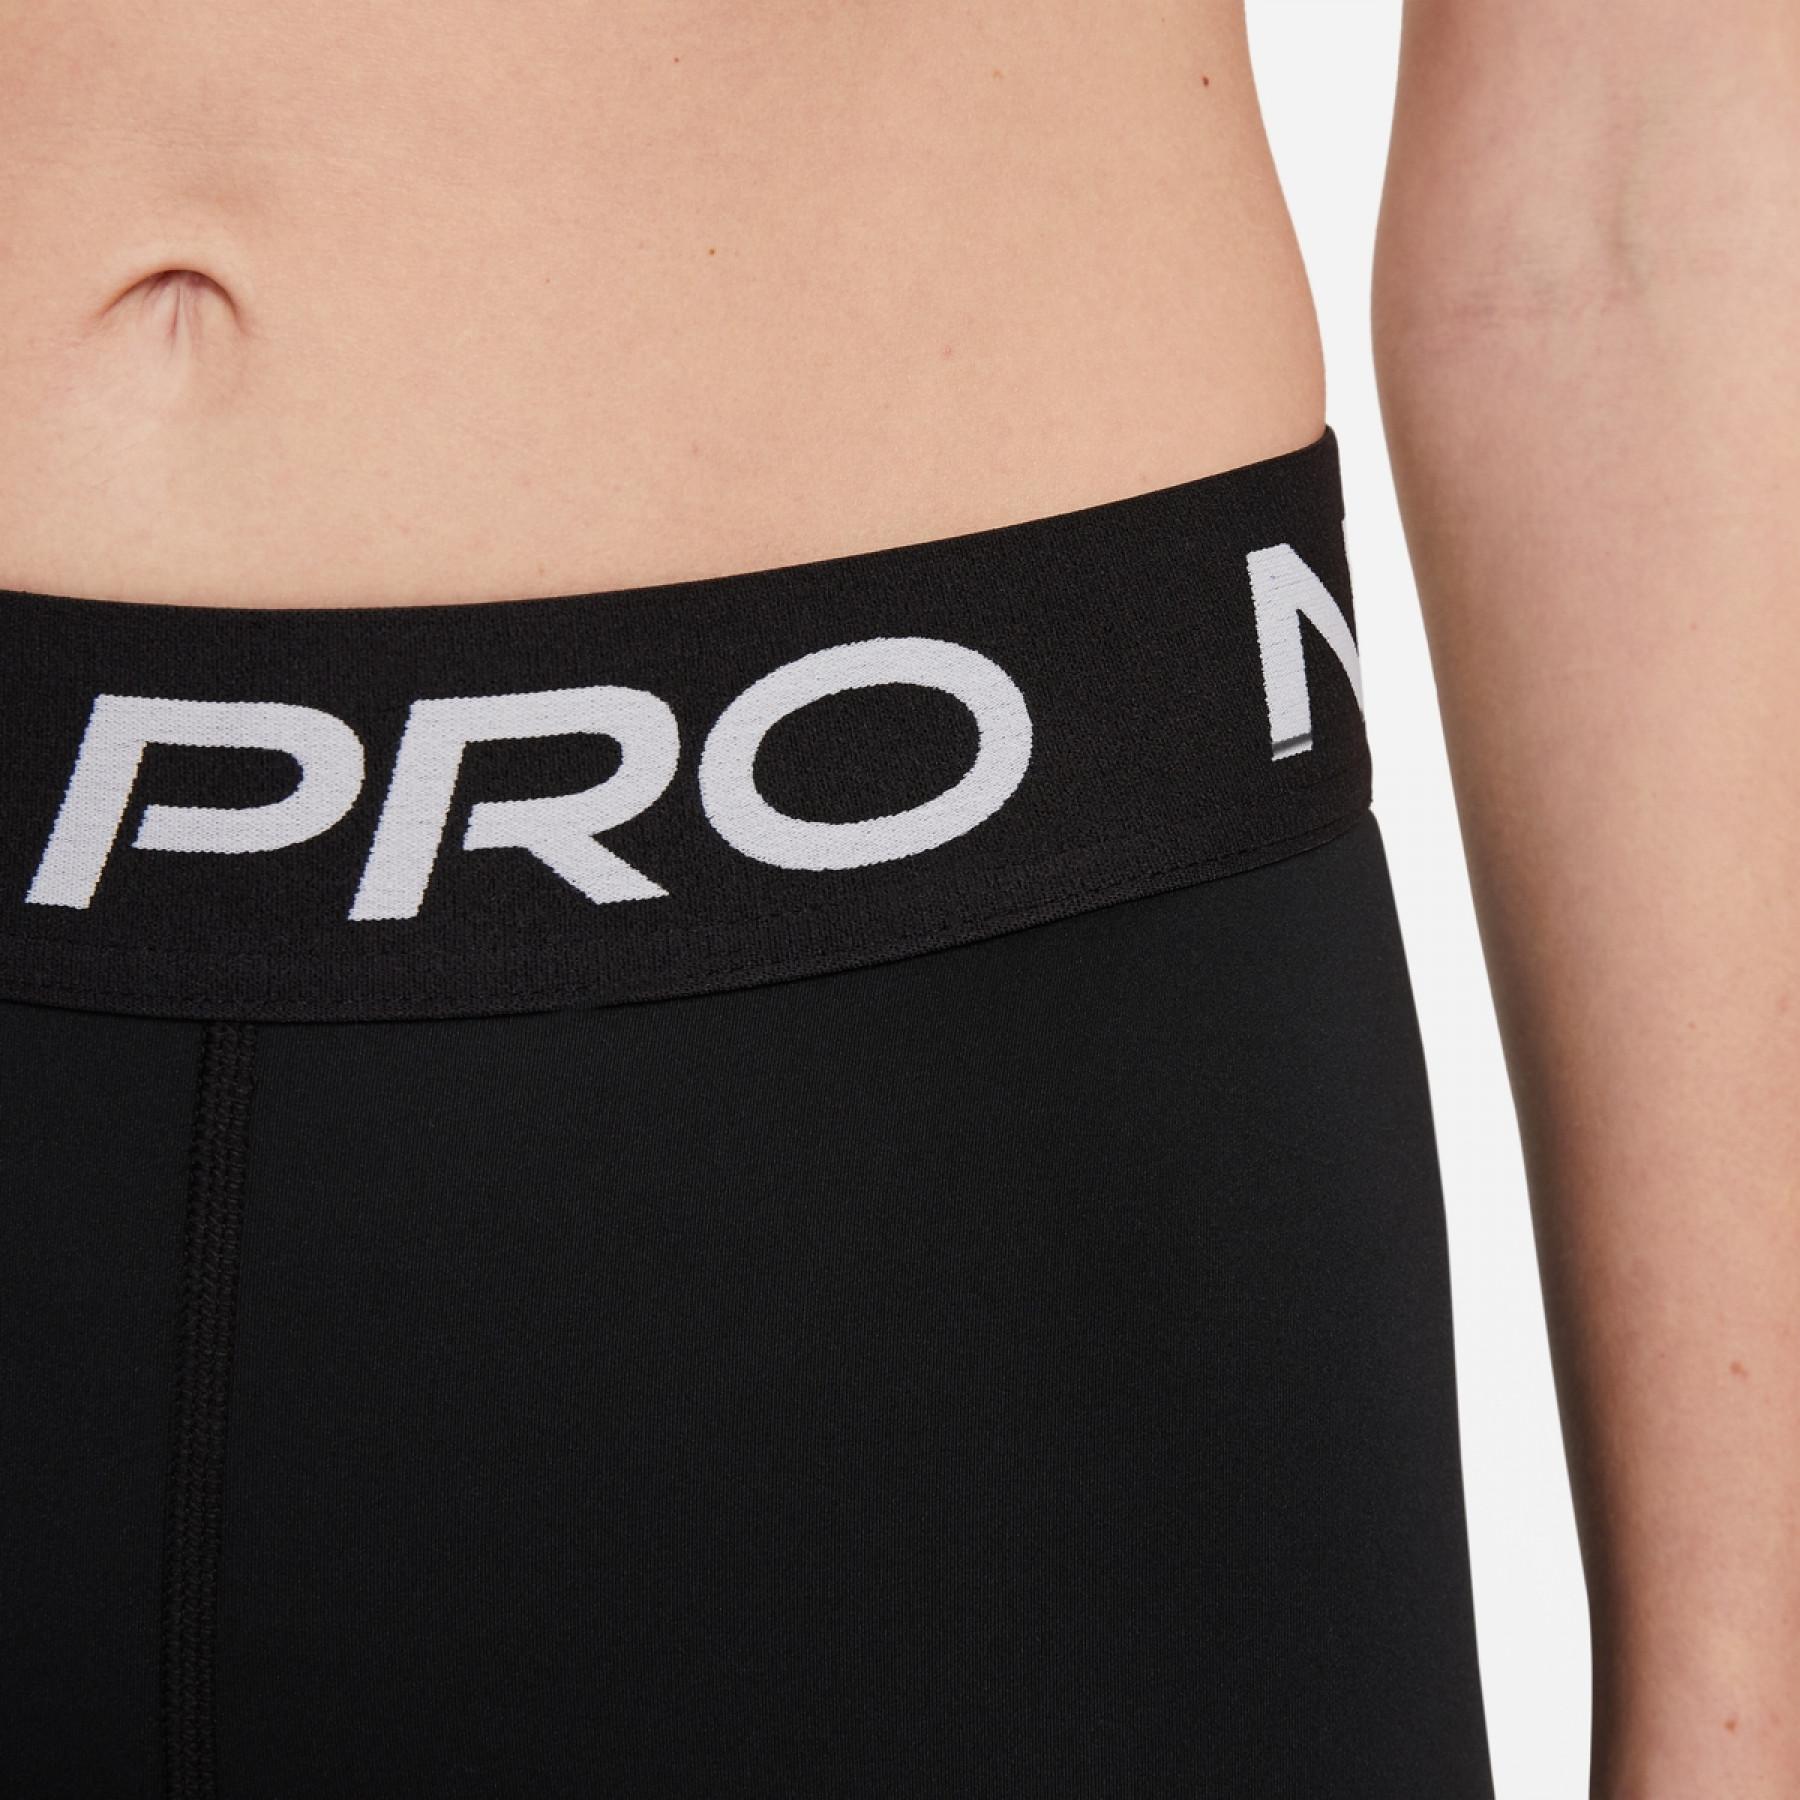 Dames shorts Nike Pro 365